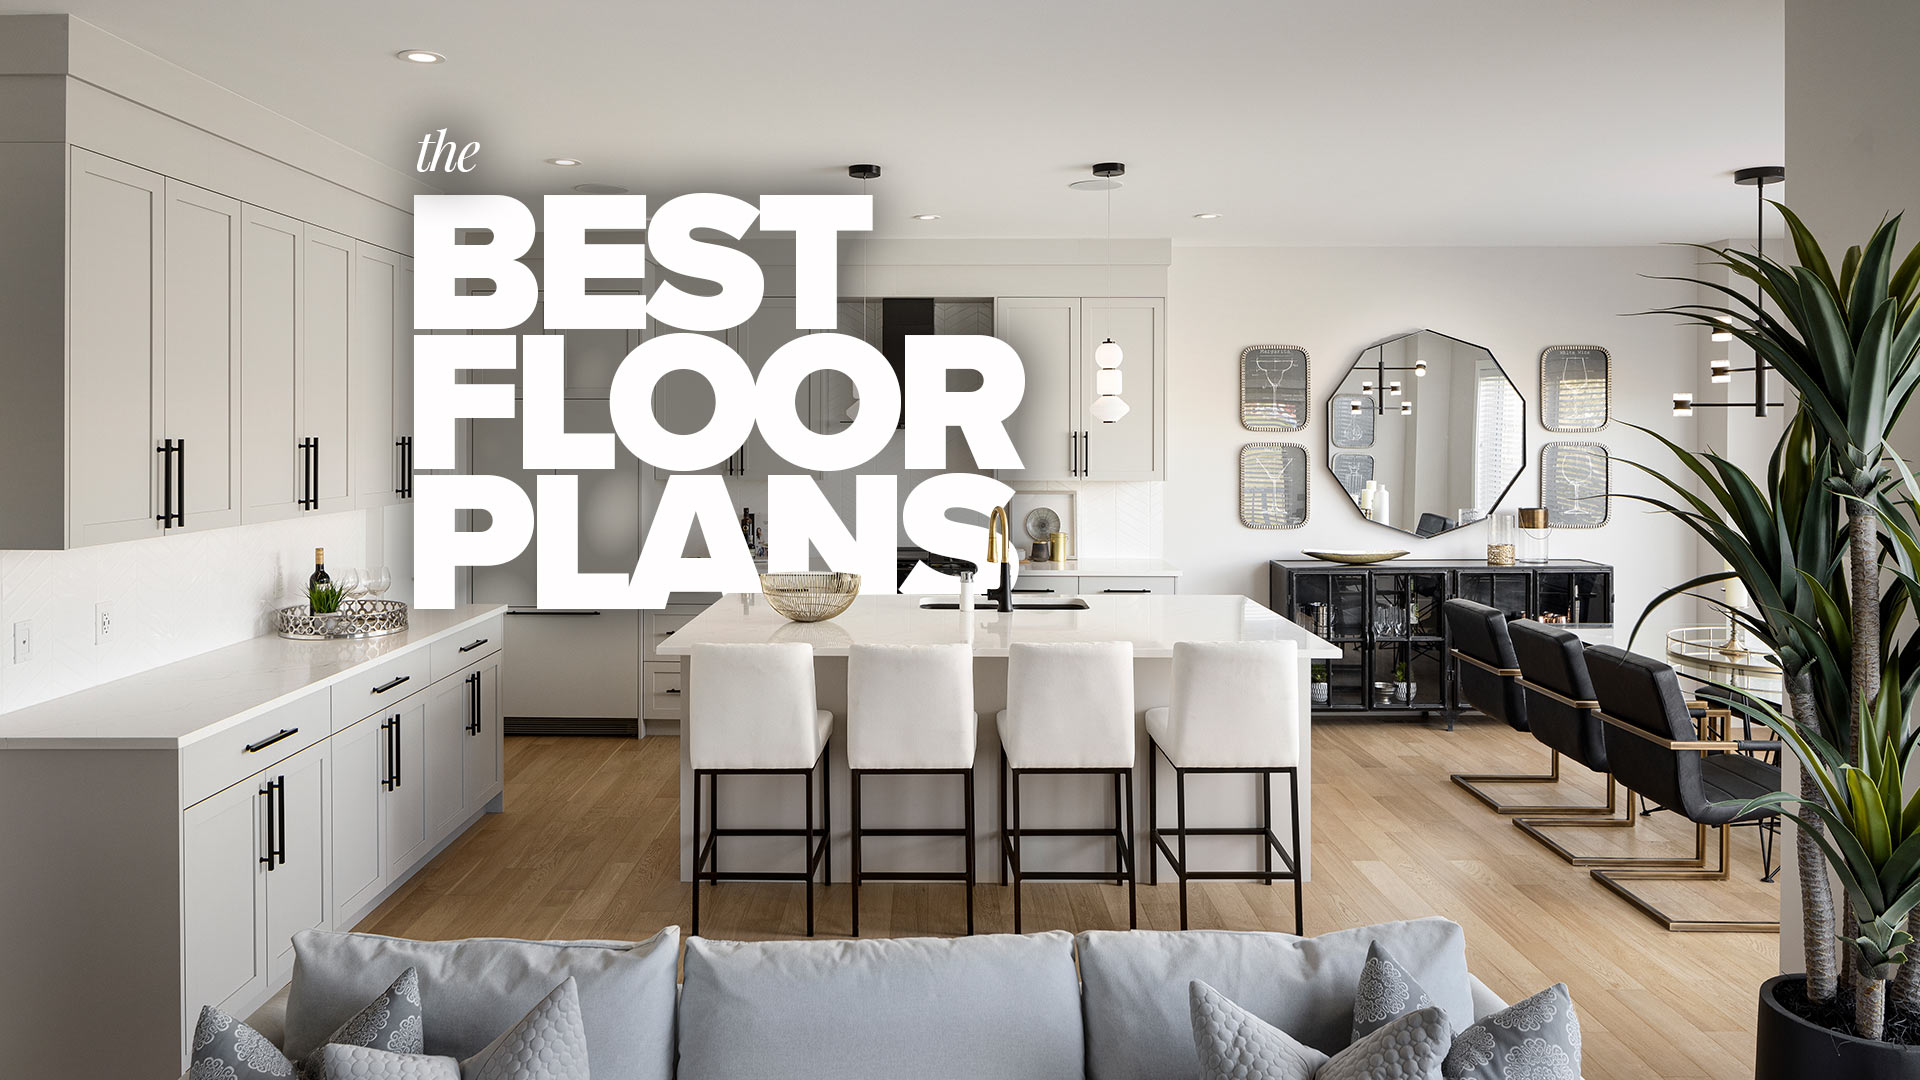 Building Calgary's BEST Floor Plans - Truman Homes